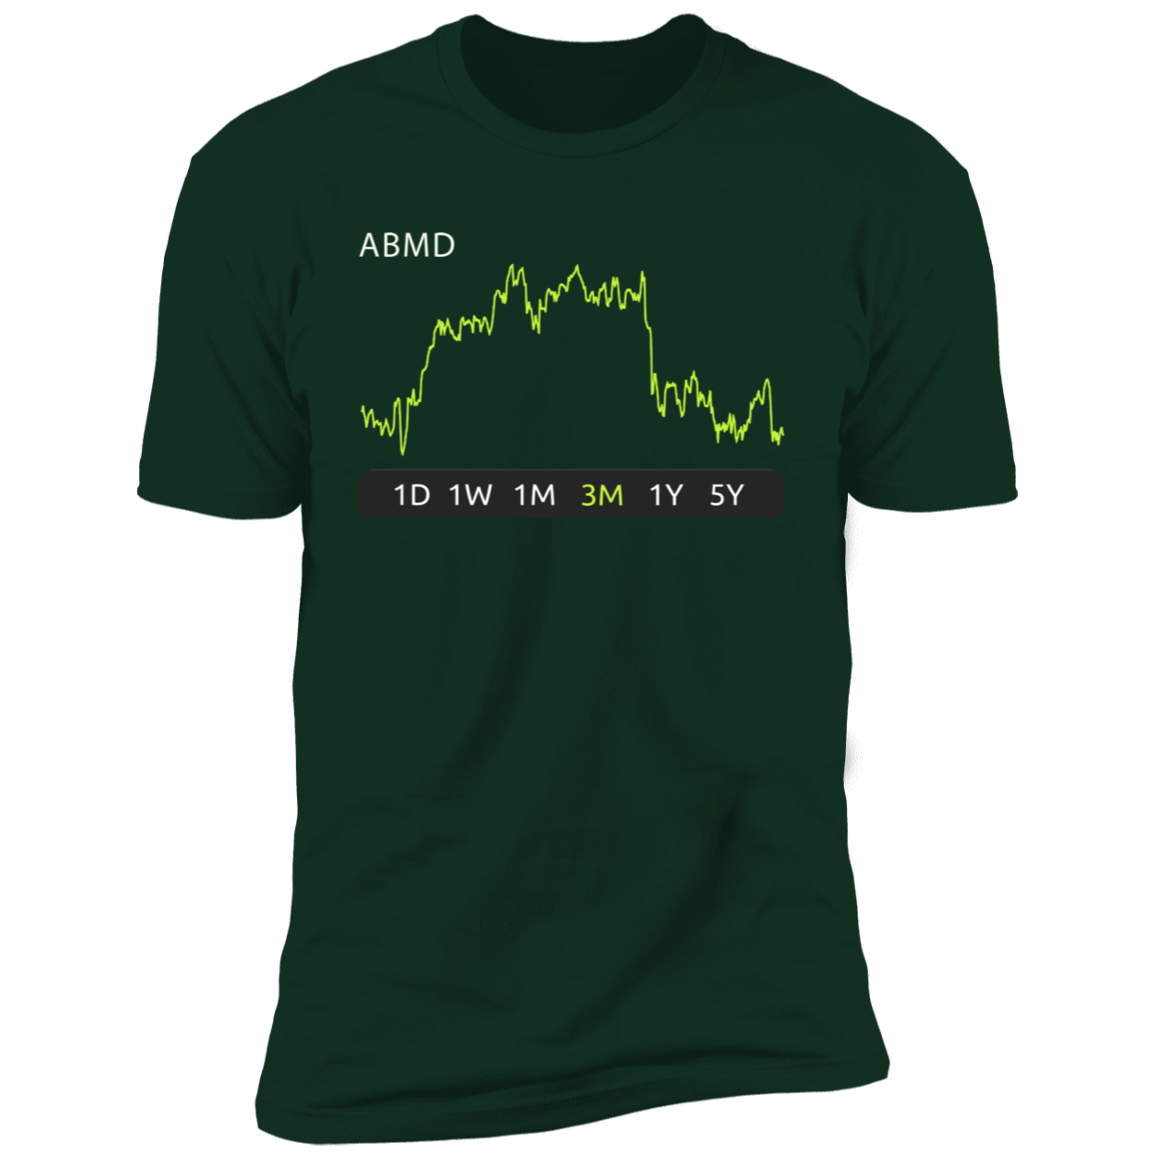 ABMD Stock 3m Premium T-Shirt